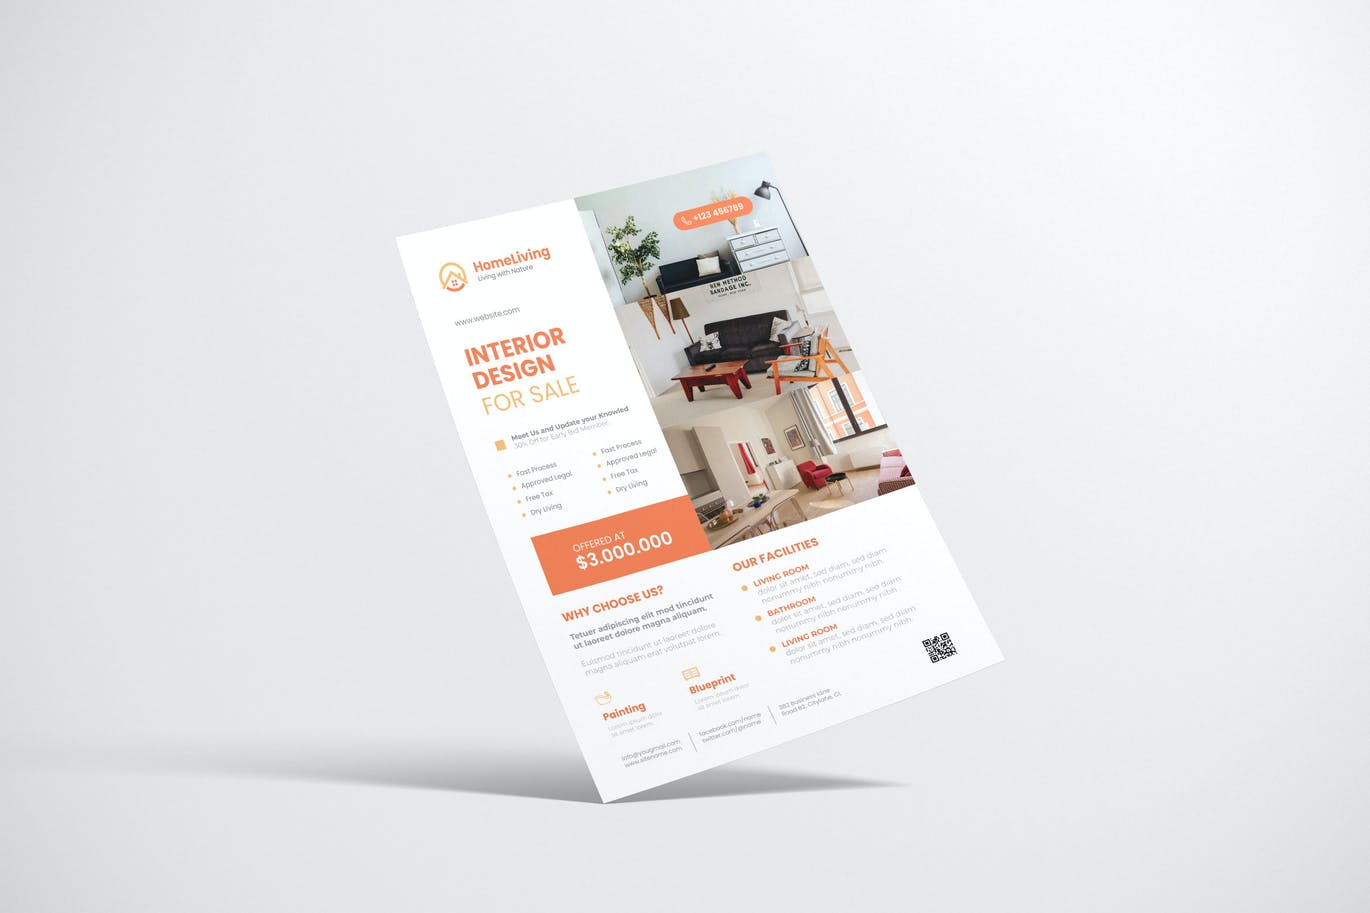 Business Service Flyer Design